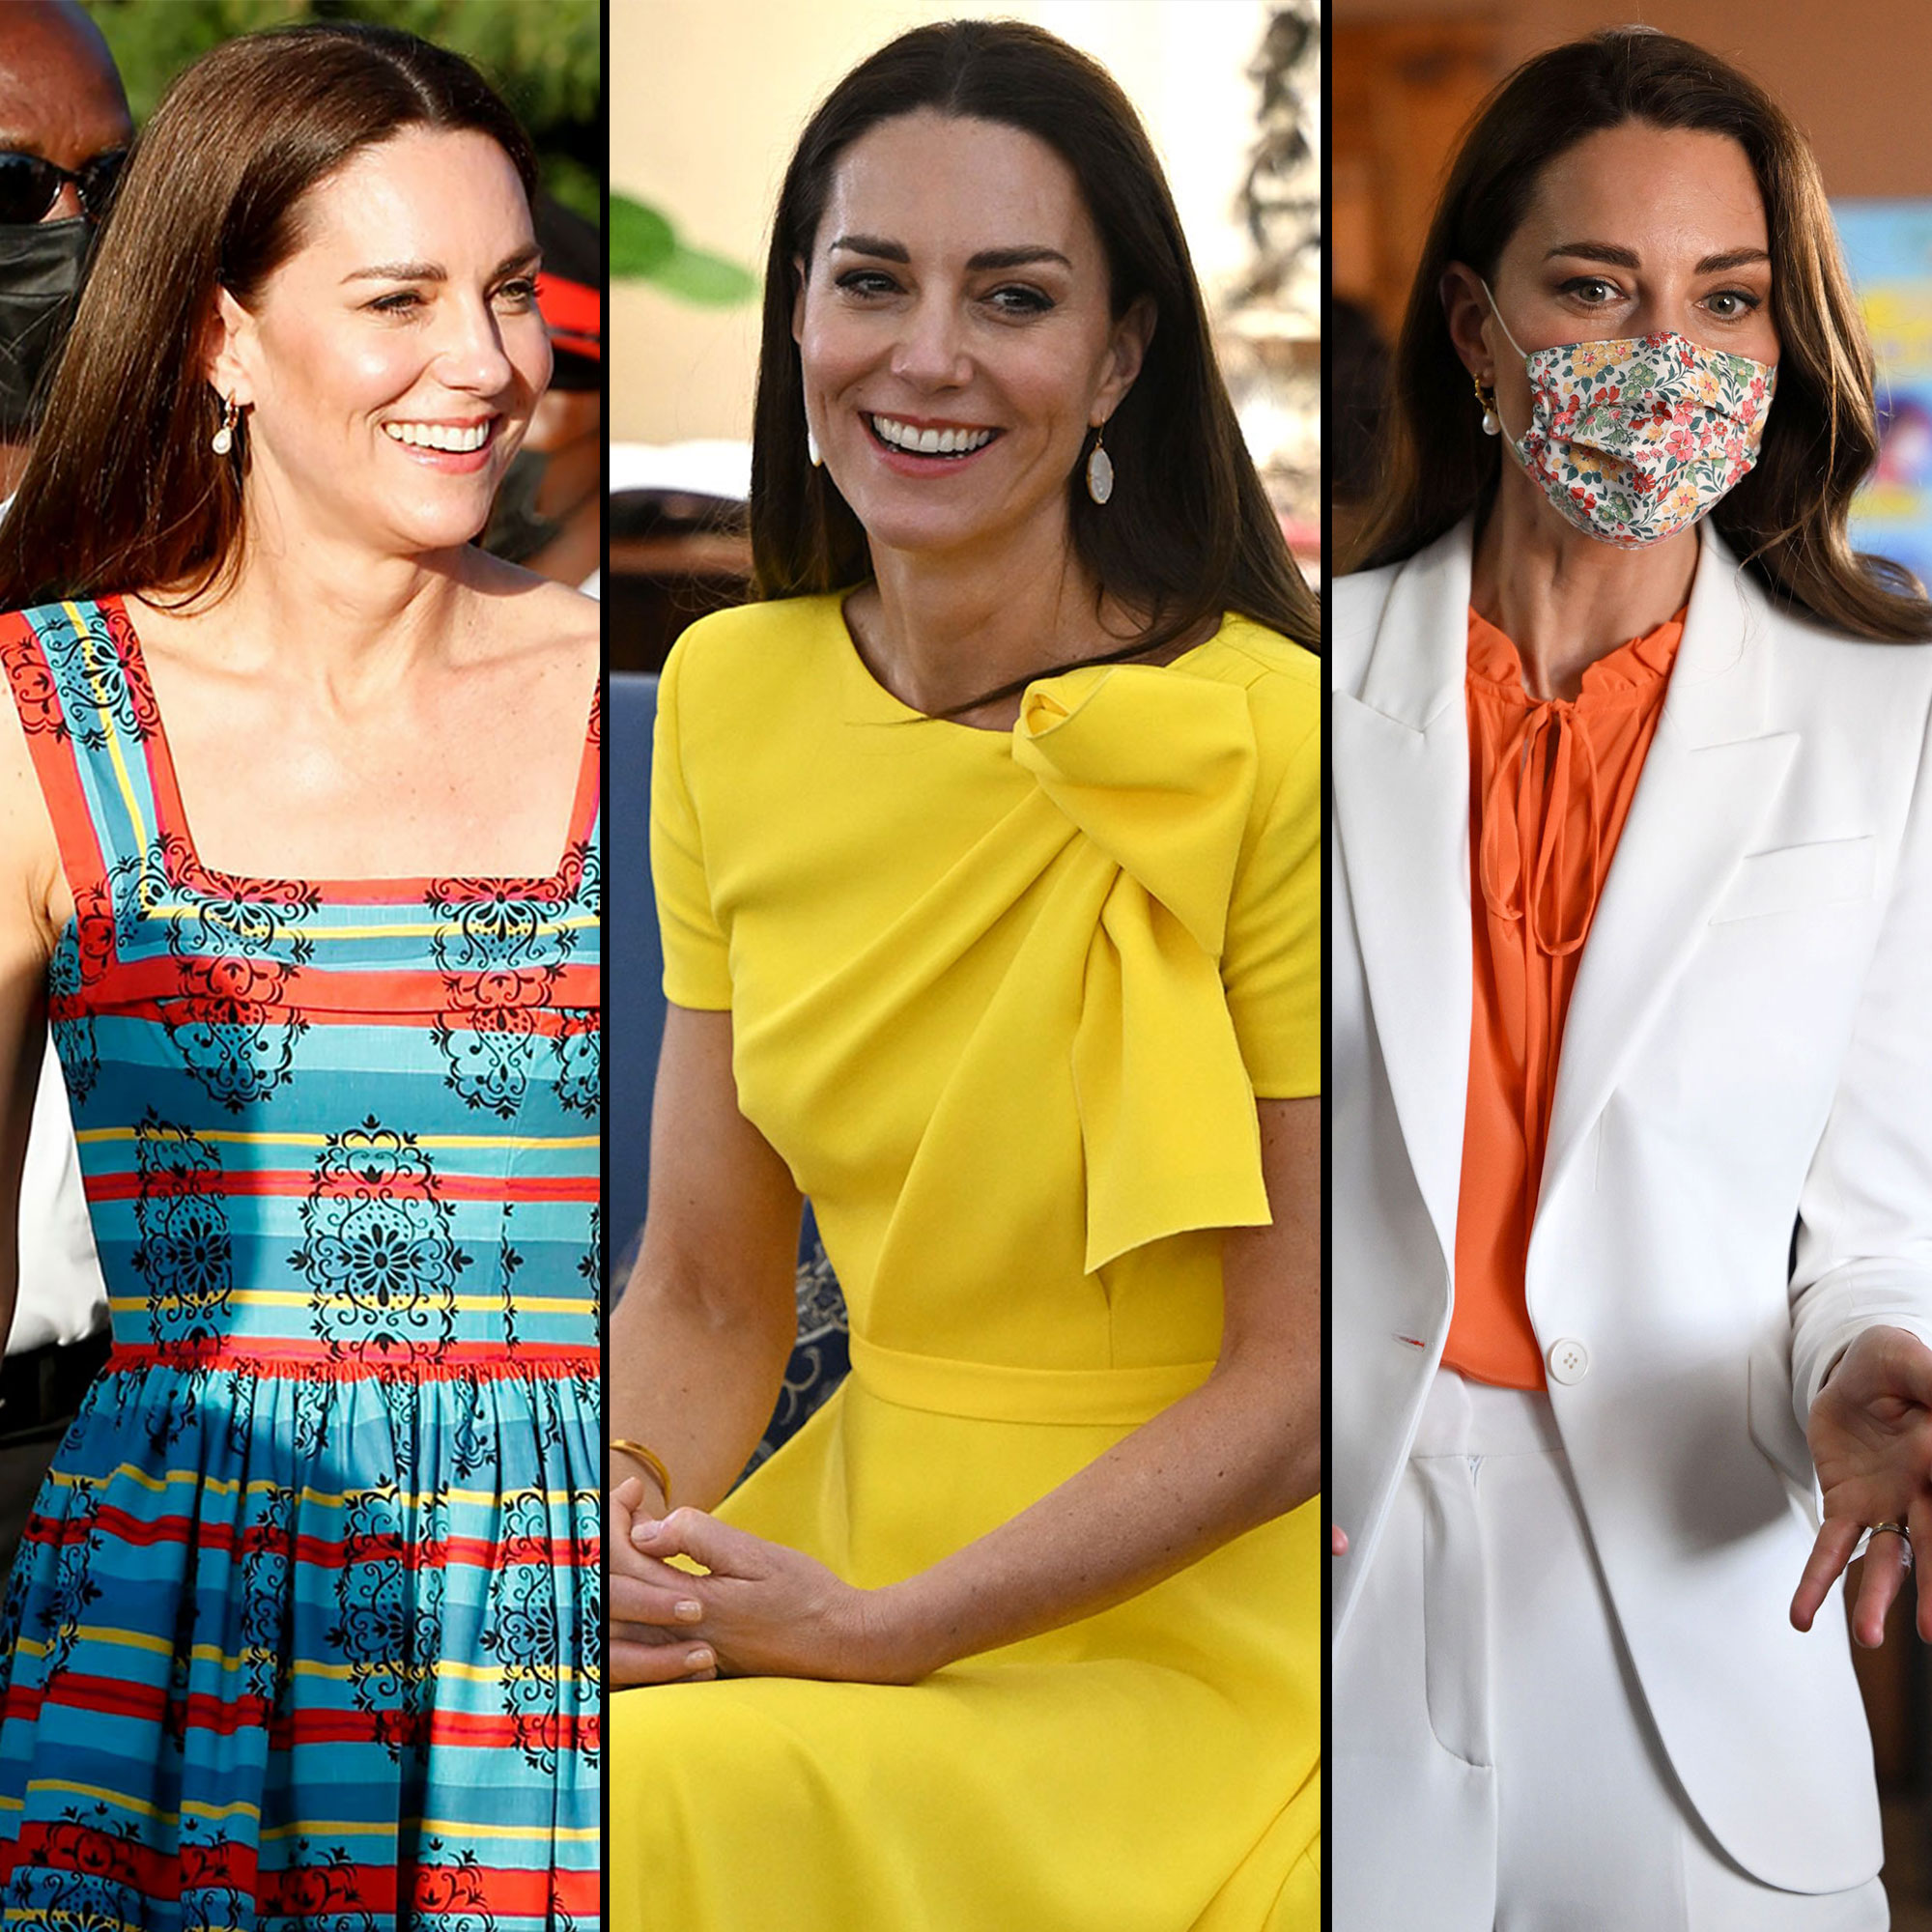 Kate Middleton wardrobe outfits on her US visit